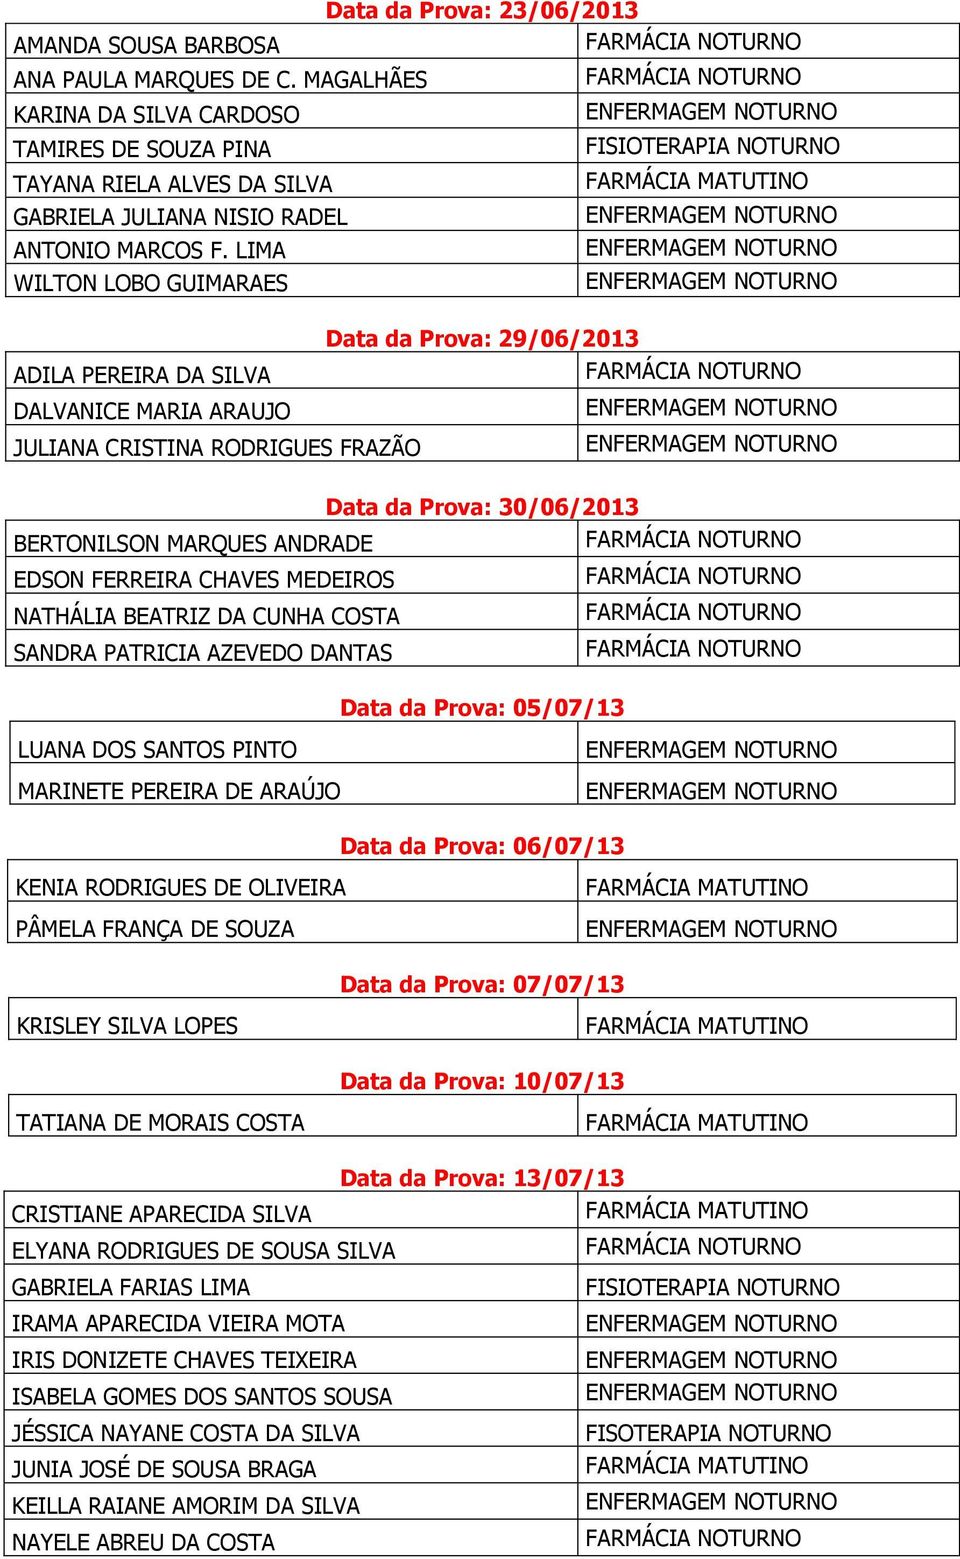 LIMA WILTON LOBO GUIMARAES Data da Prova: 29/06/2013 ADILA PEREIRA DA SILVA DALVANICE MARIA ARAUJO JULIANA CRISTINA RODRIGUES FRAZÃO Data da Prova: 30/06/2013 BERTONILSON MARQUES ANDRADE EDSON